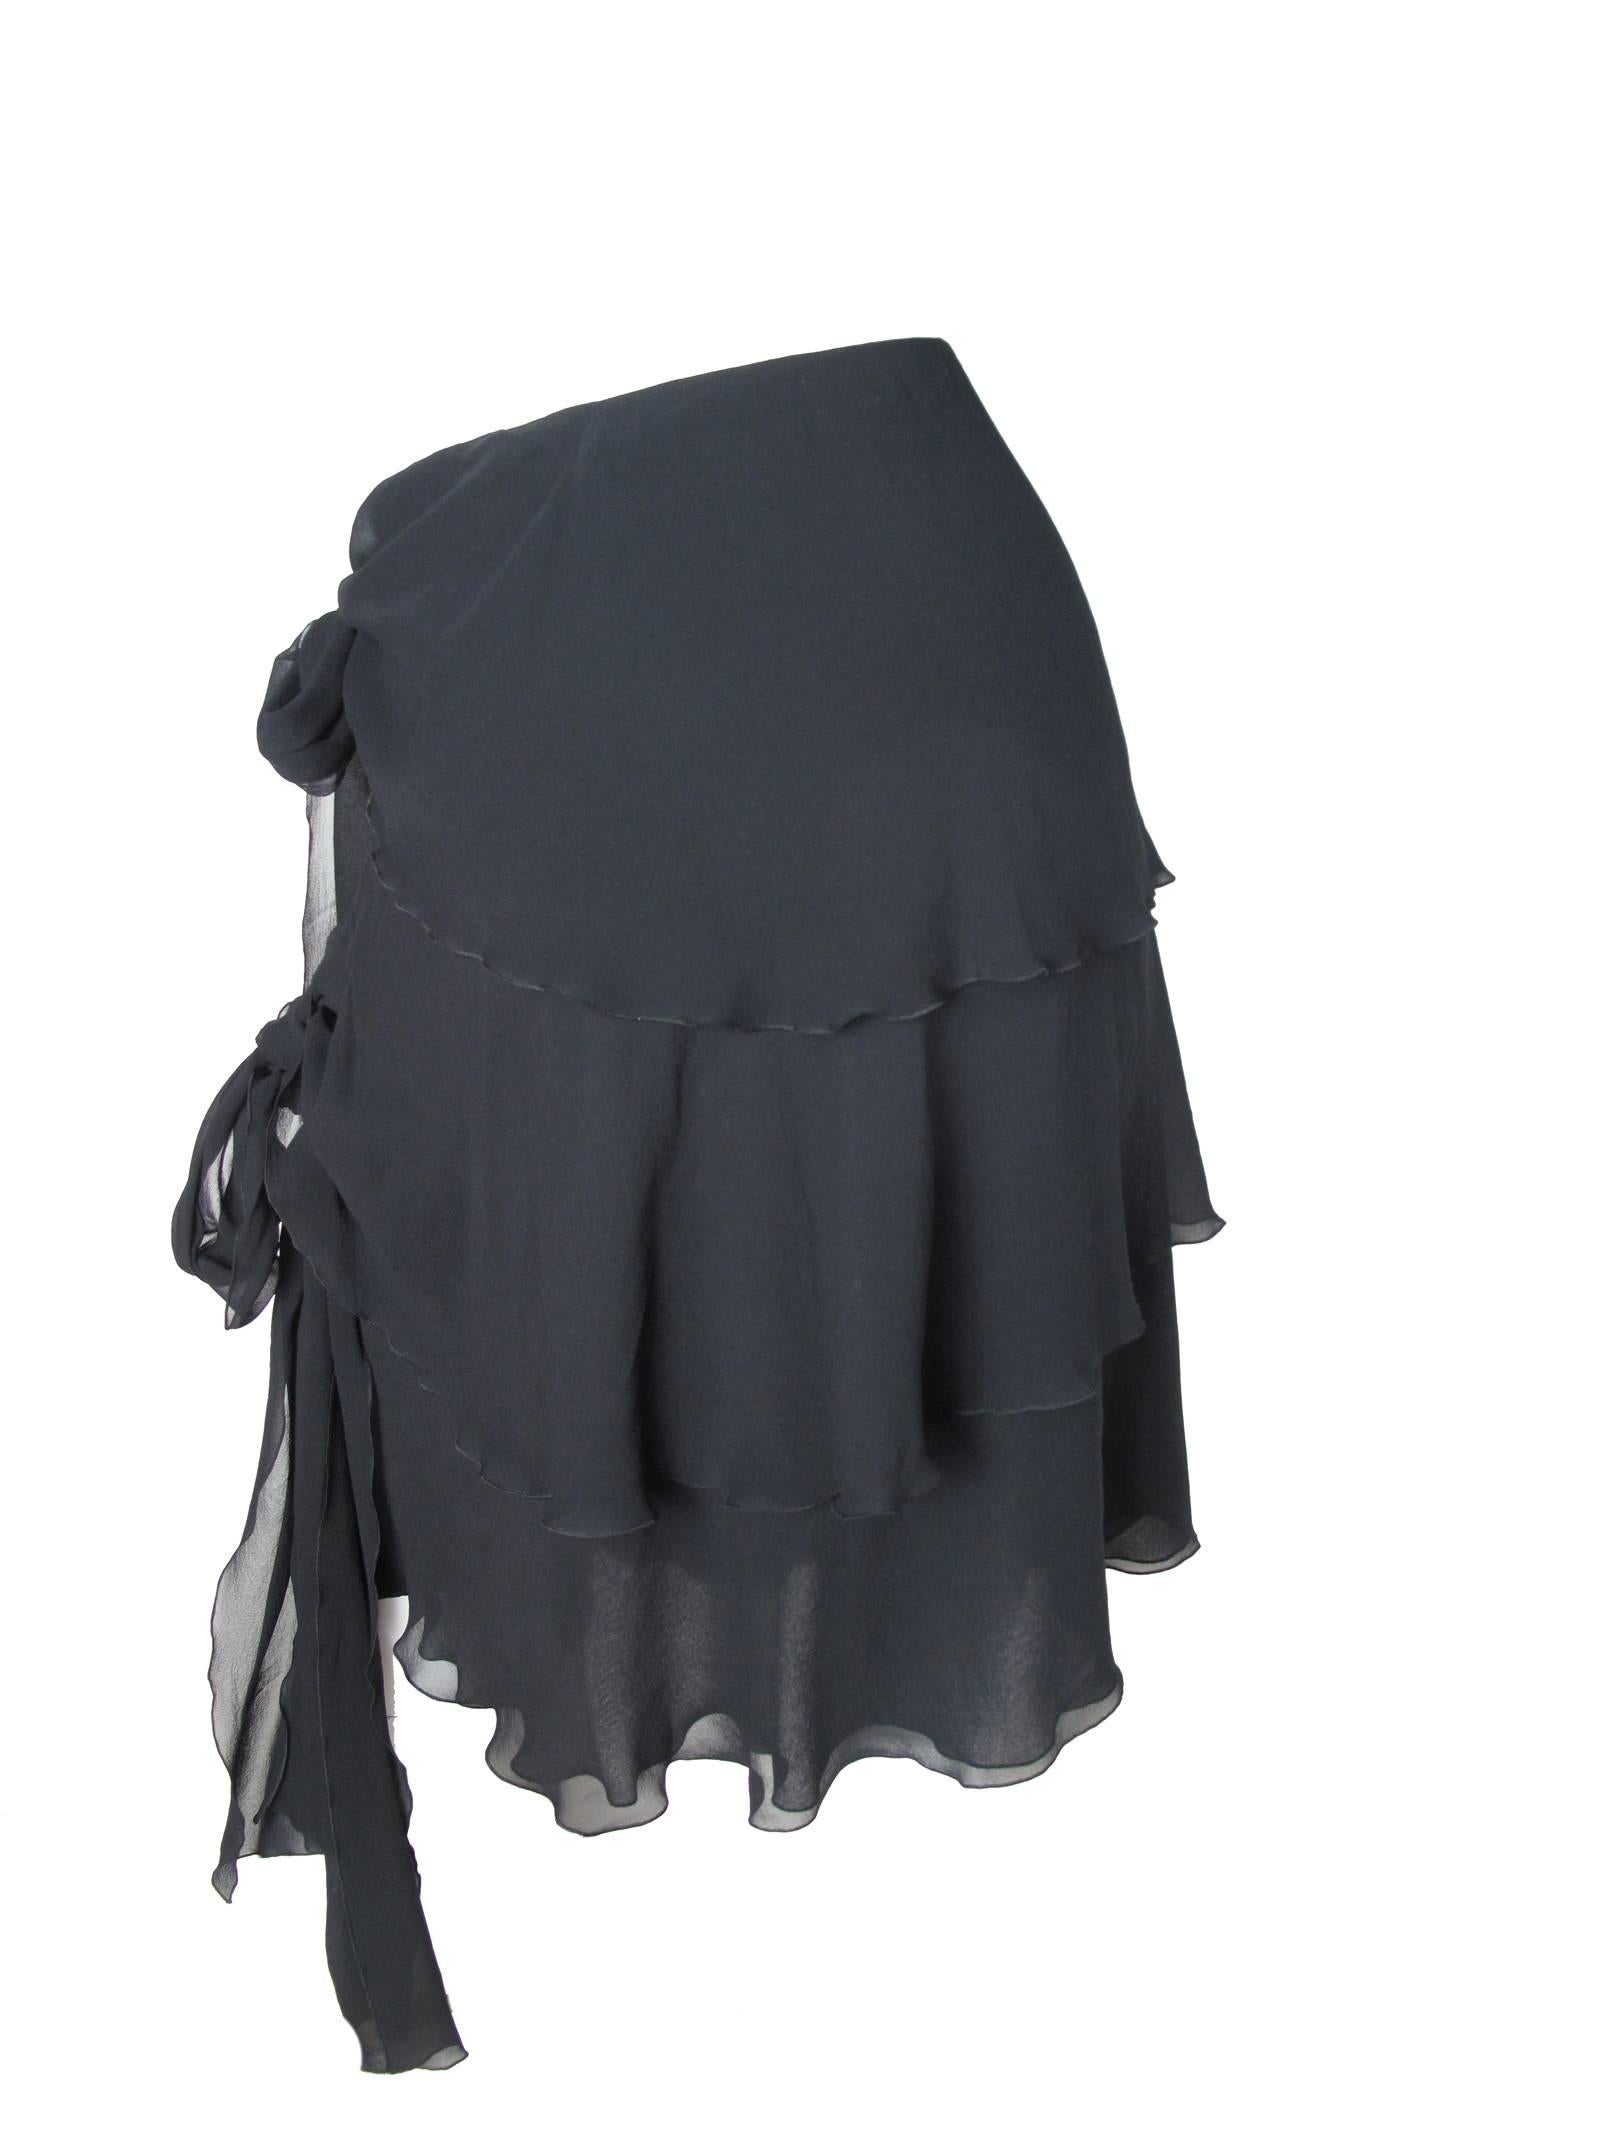 Black Chanel Silk Chiffon Ruffle Skirt with Ties 